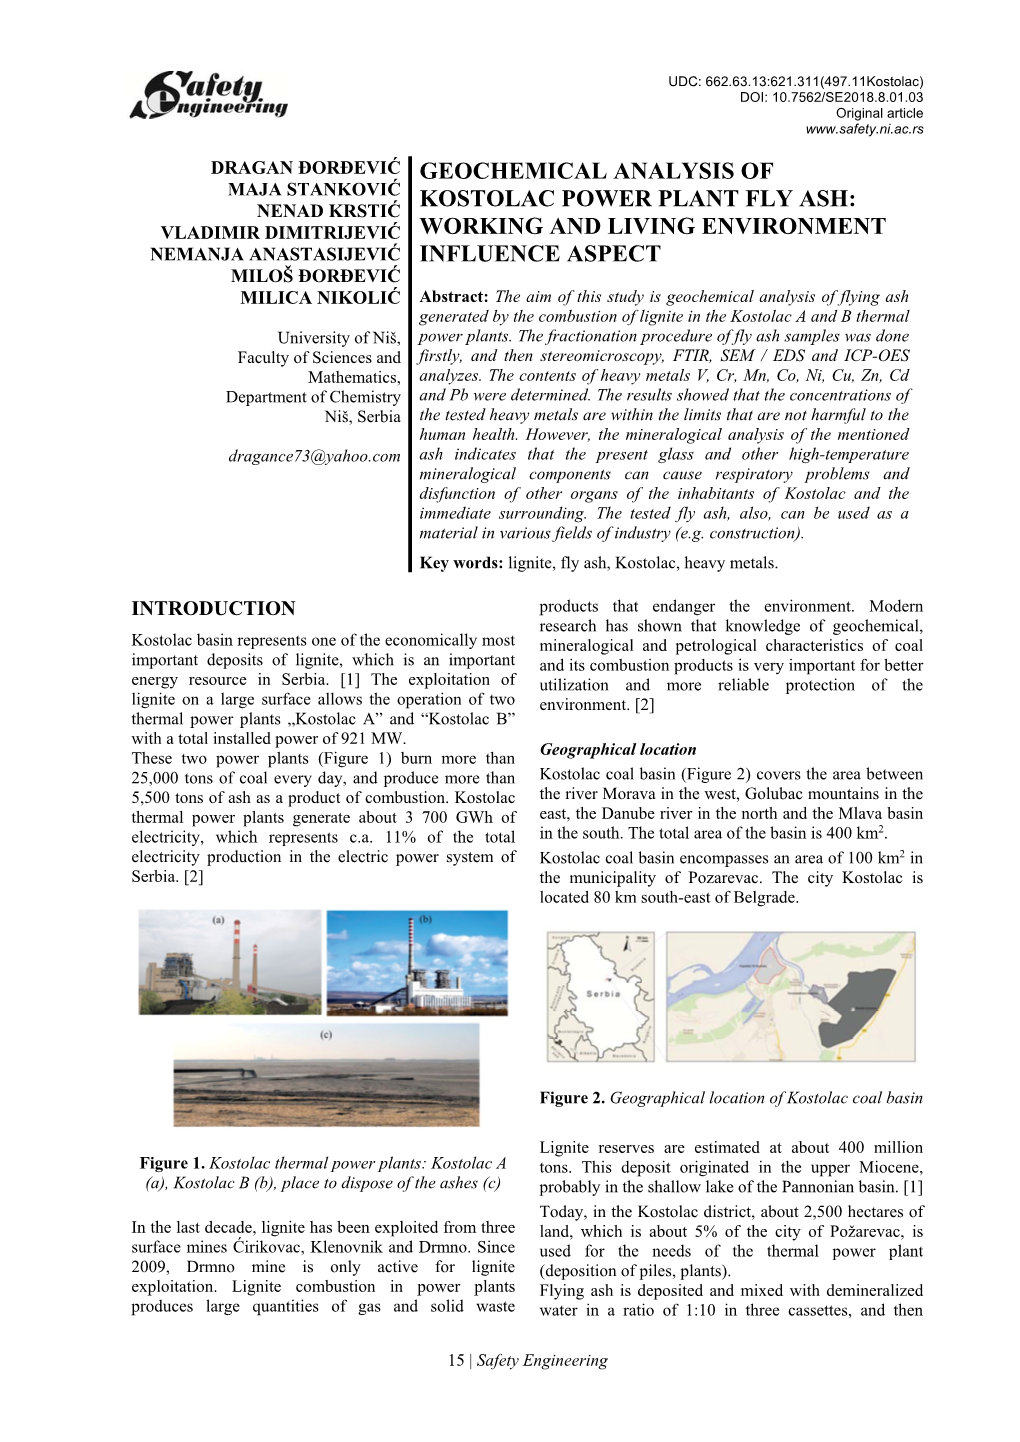 Geochemical Analysis of Kostolac Power Plant Fly